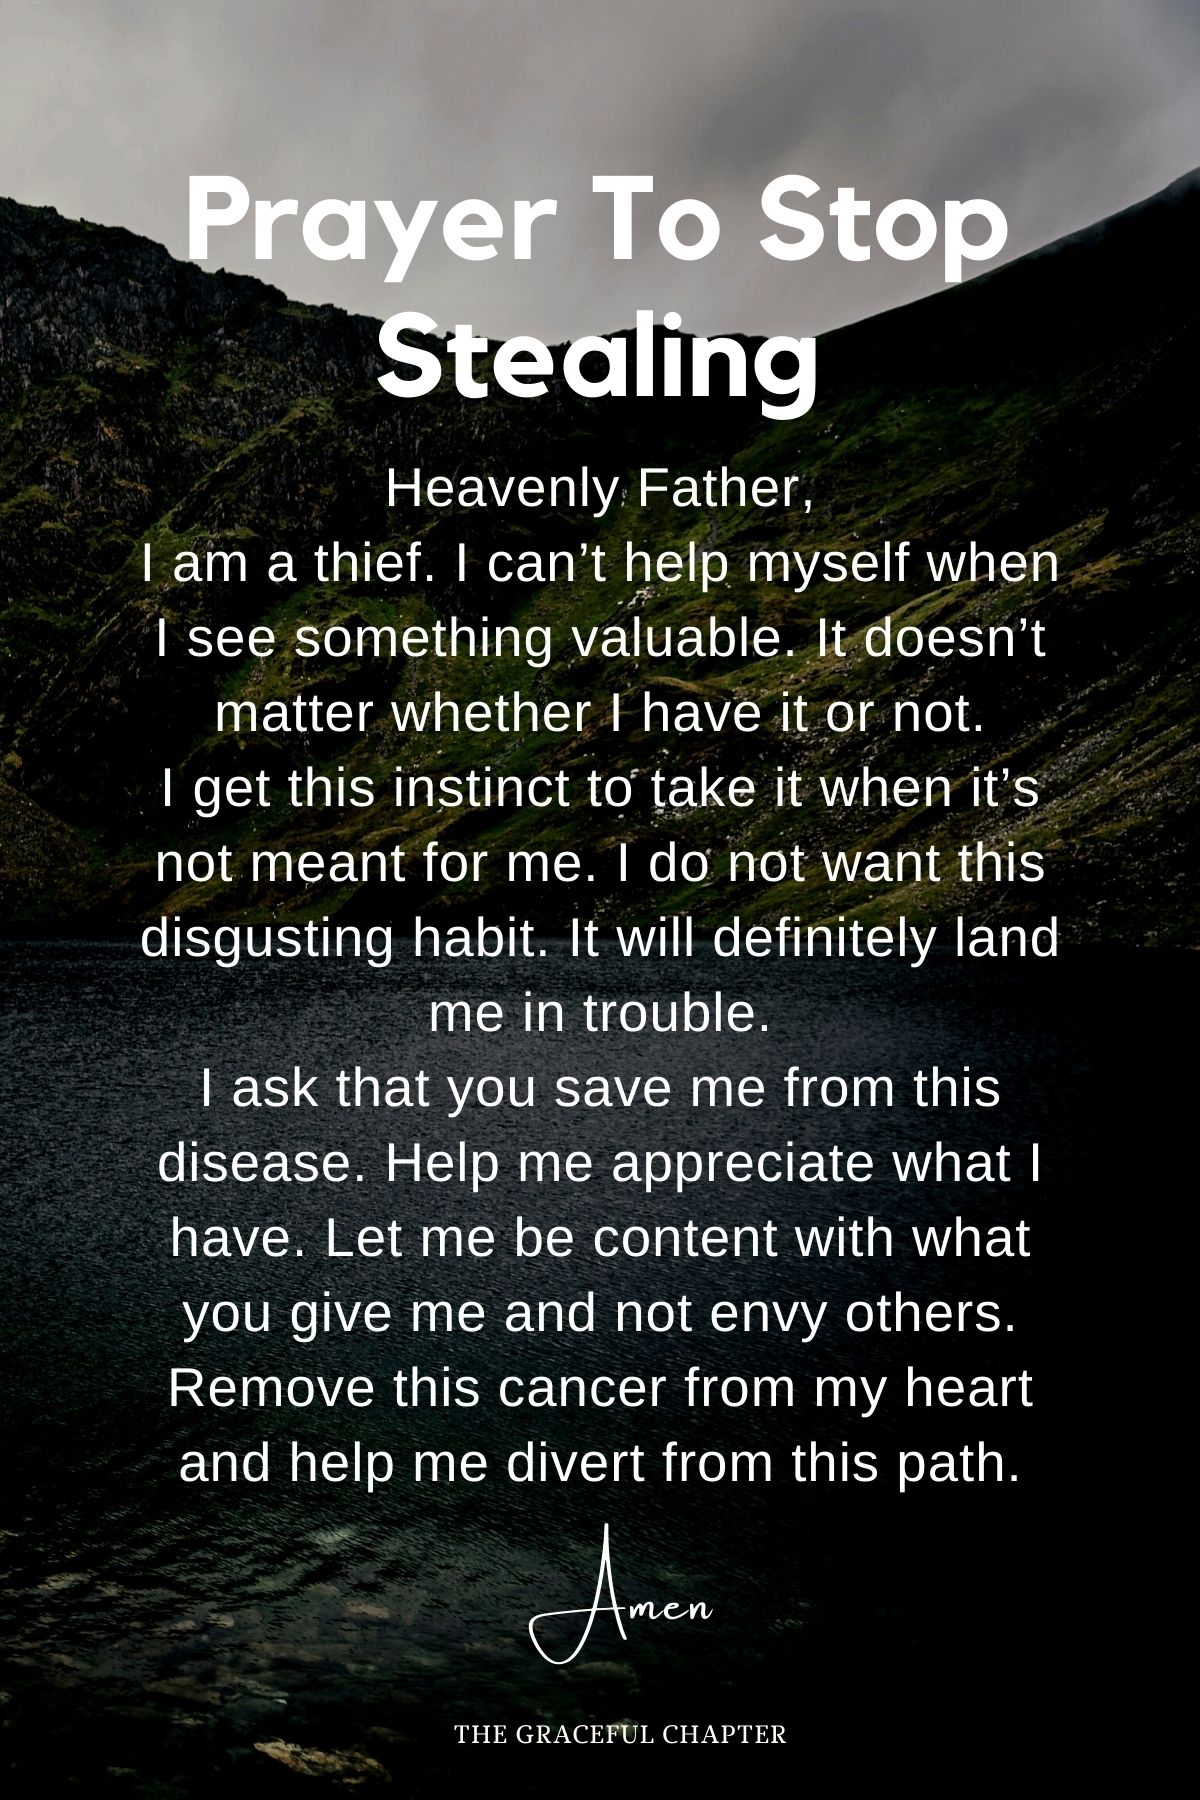 Prayer to stop stealing